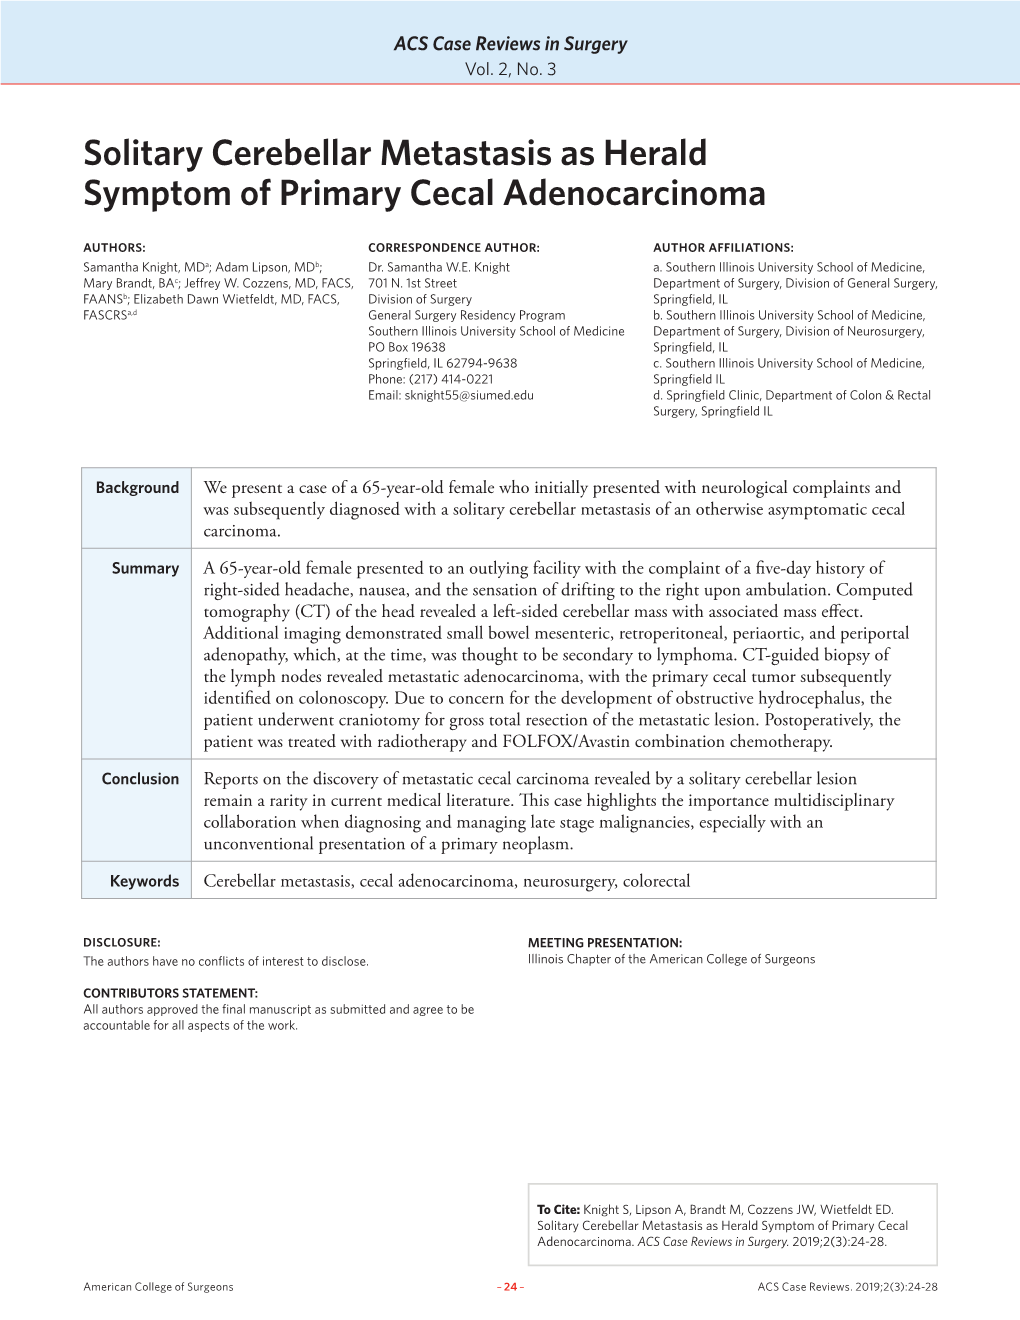 Solitary Cerebellar Metastasis As Herald Symptom of Primary Cecal Adenocarcinoma